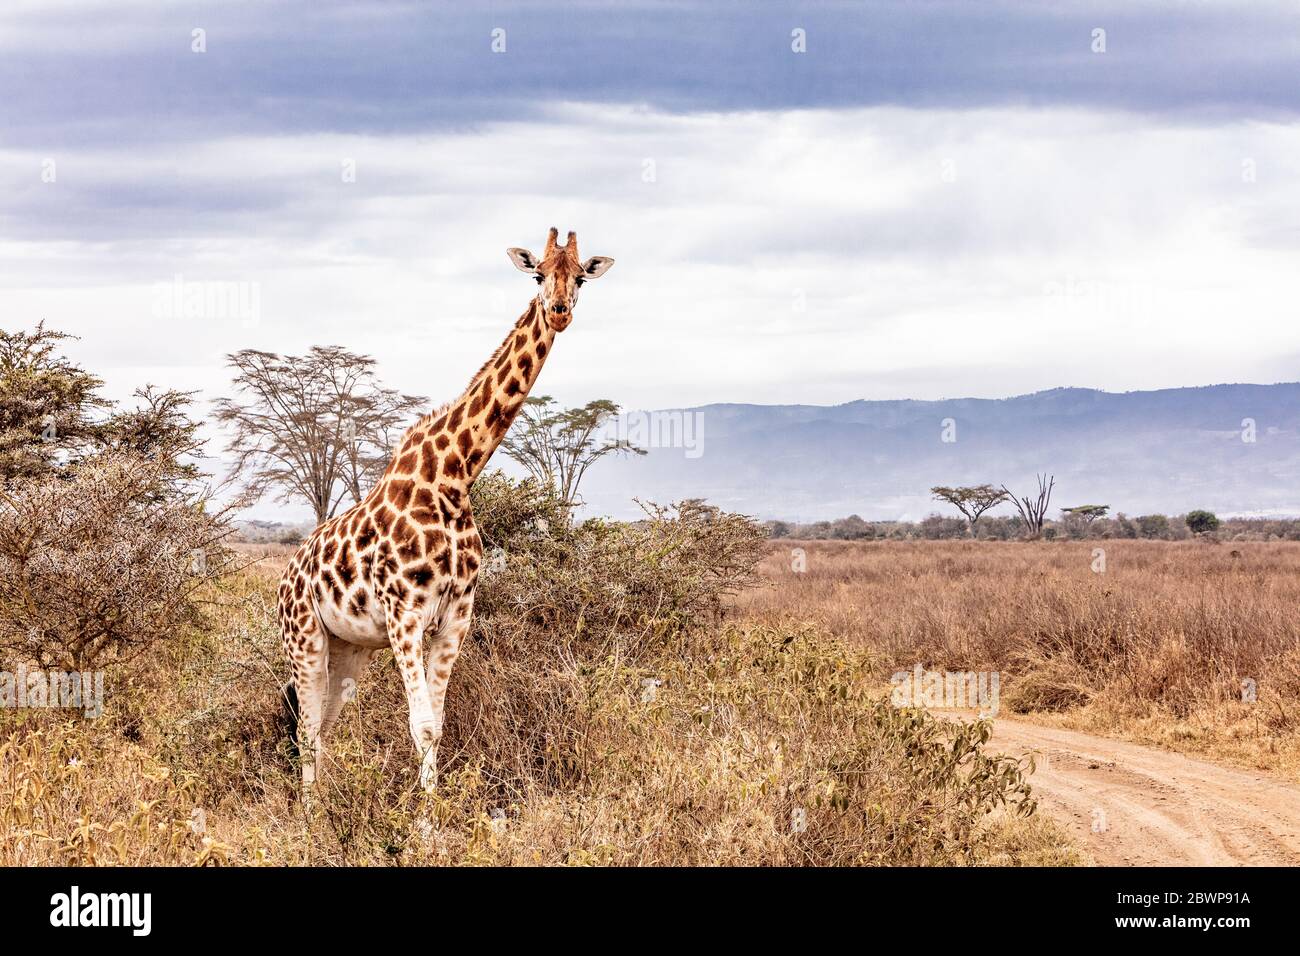 Beautiful endangered Rothschild's giraffe standing on side of road in Lake Nakuru area of Kenya in Africa Stock Photo